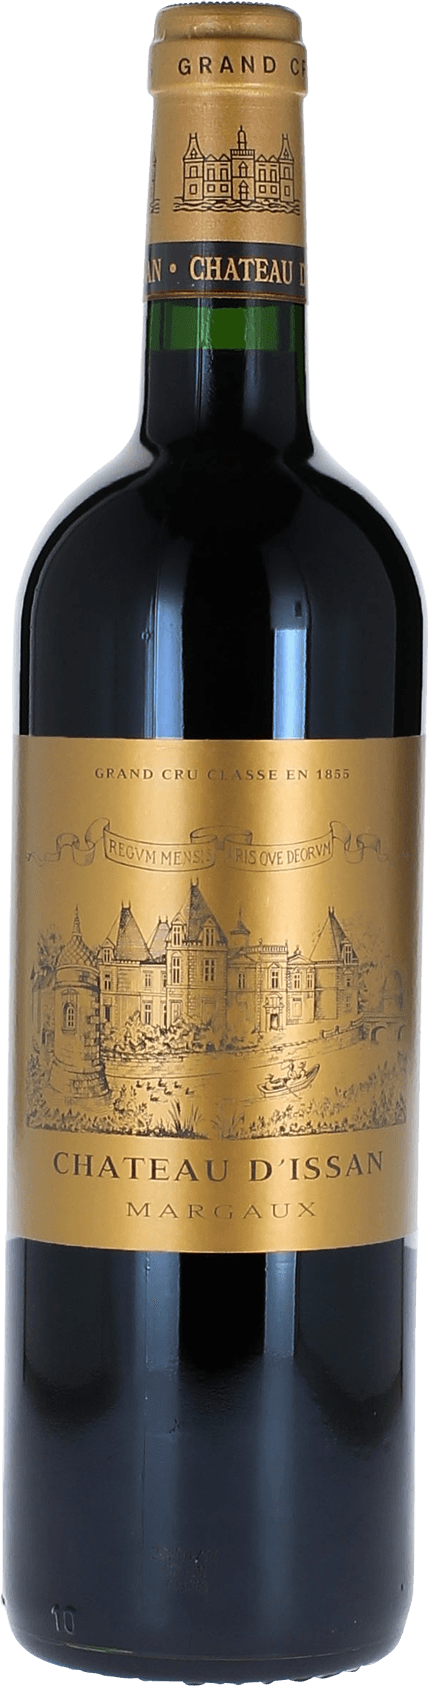 Issan 1996 3me Grand cru class Margaux, Bordeaux rouge